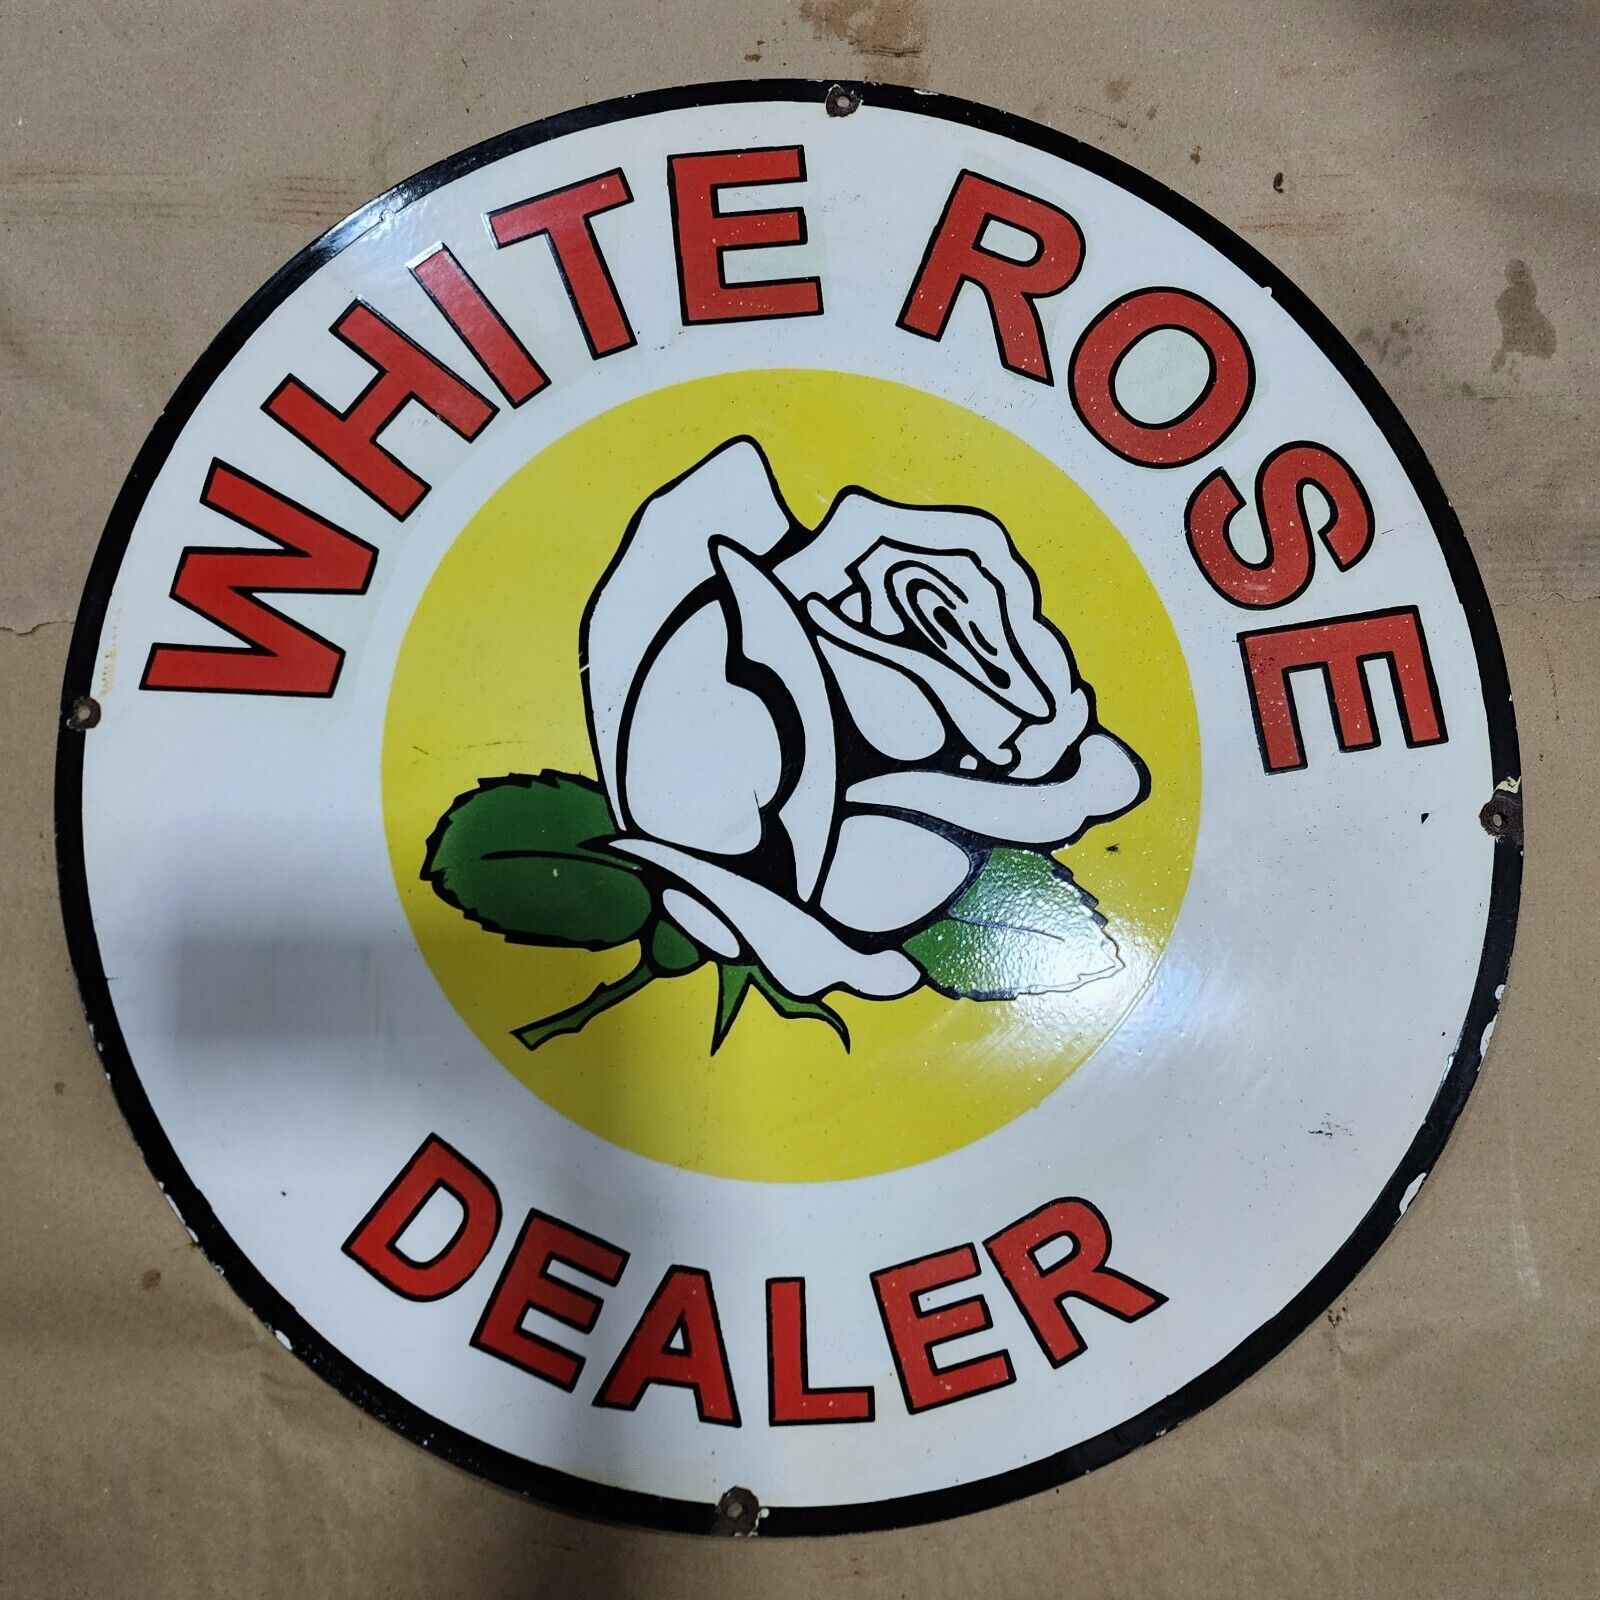 WHITE ROSE DEALER PORCELAIN ENAMEL SIGN 30 INCHES ROUND